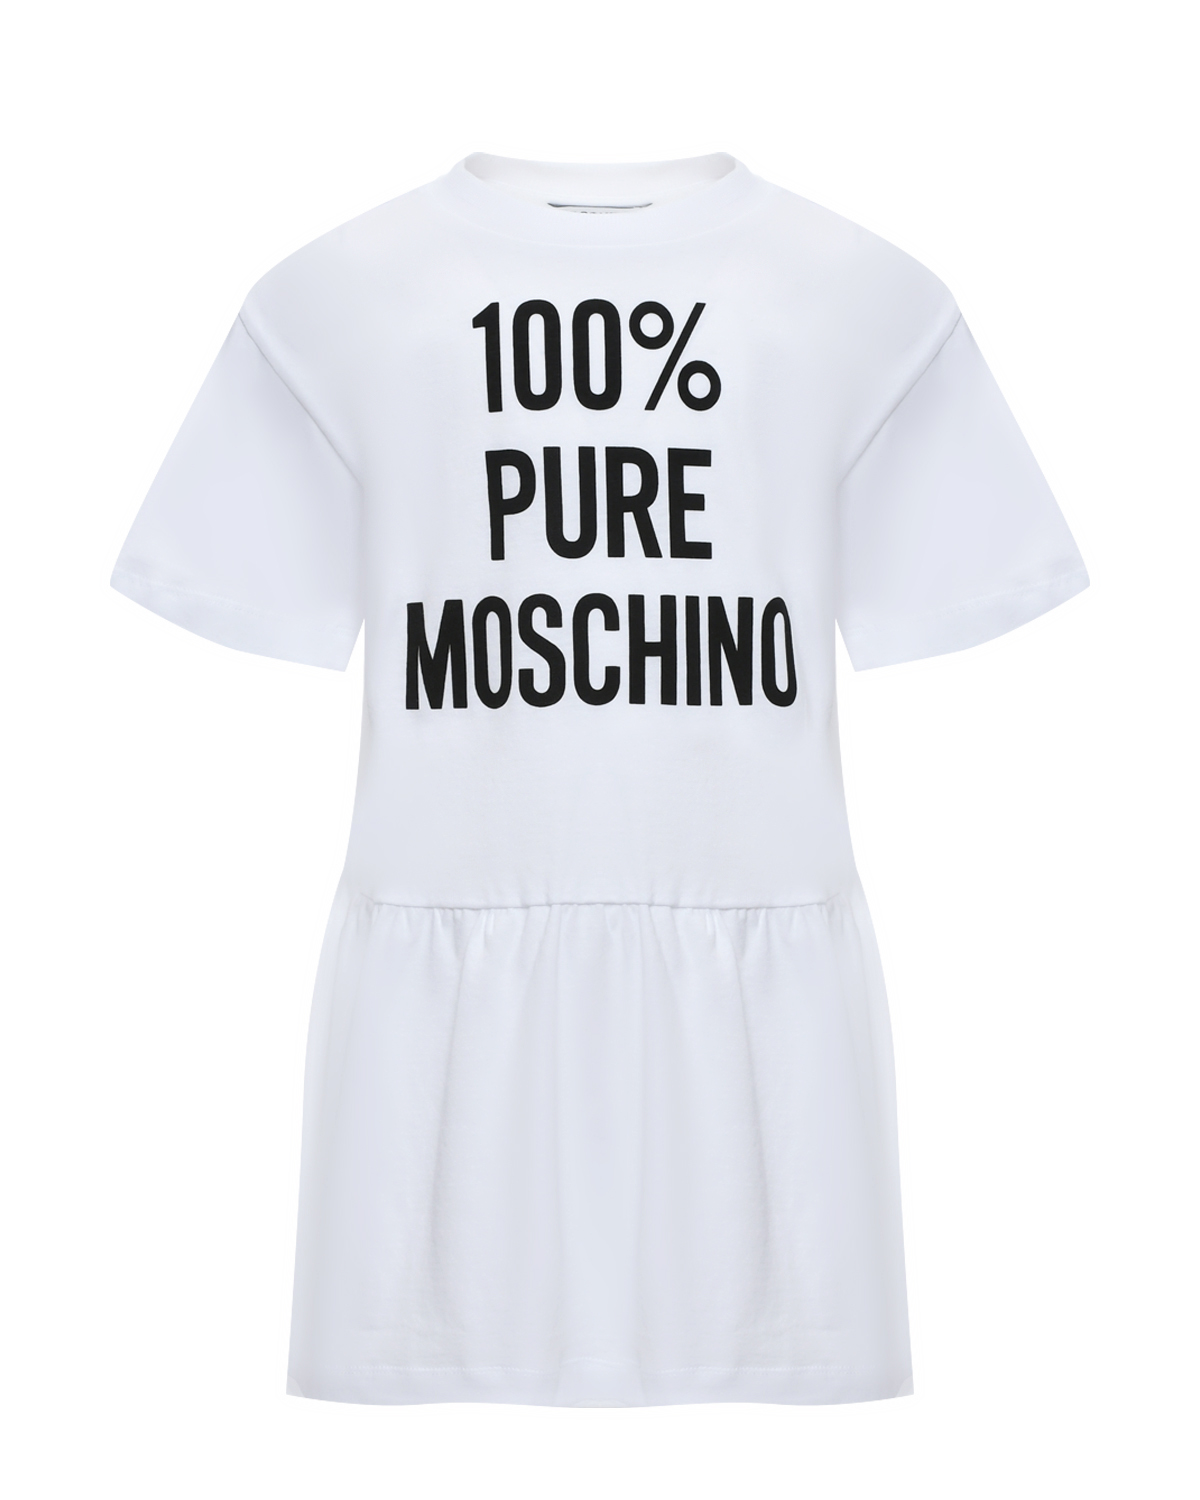 Платье с принтом "100% Pure Moschino", размер 164, цвет белый - фото 1